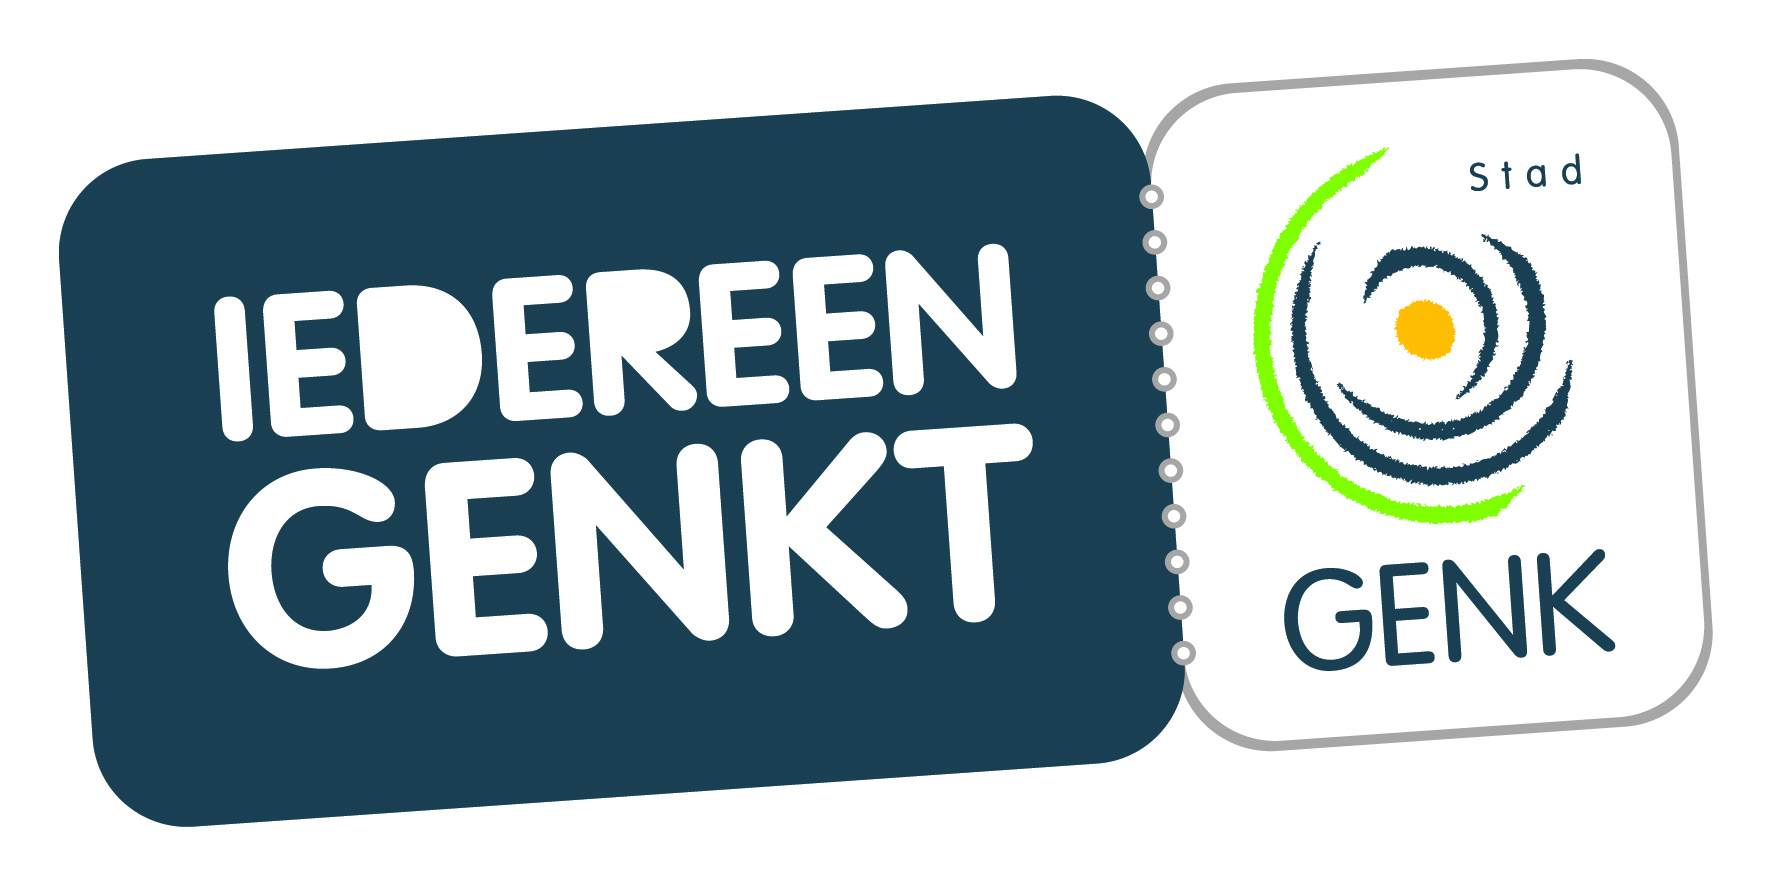 Stad Genk Logo